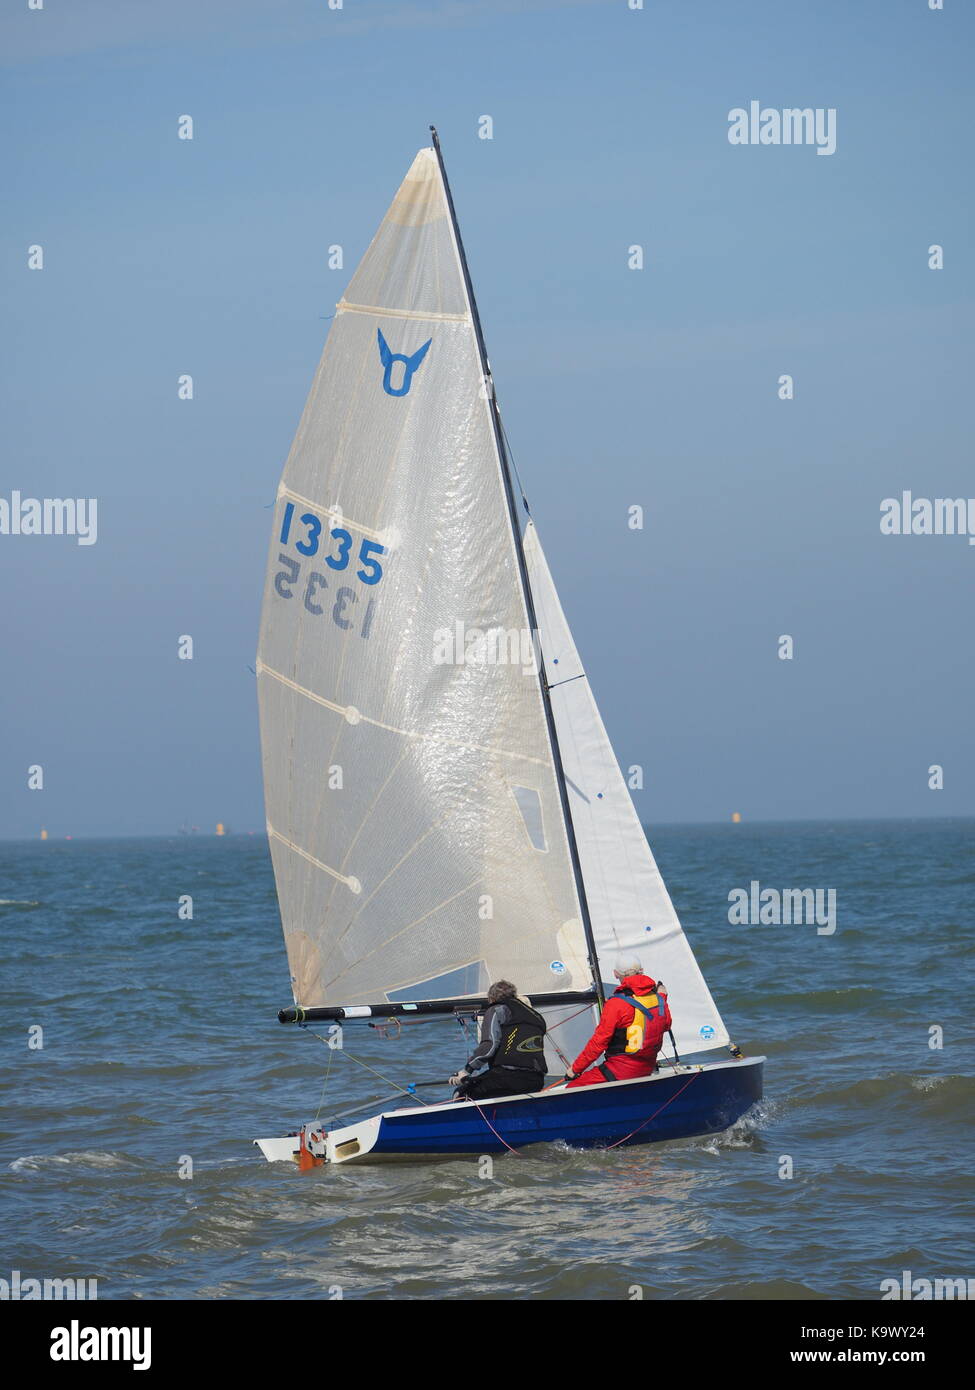 An Osprey class sailing dinghy Stock Photo - Alamy